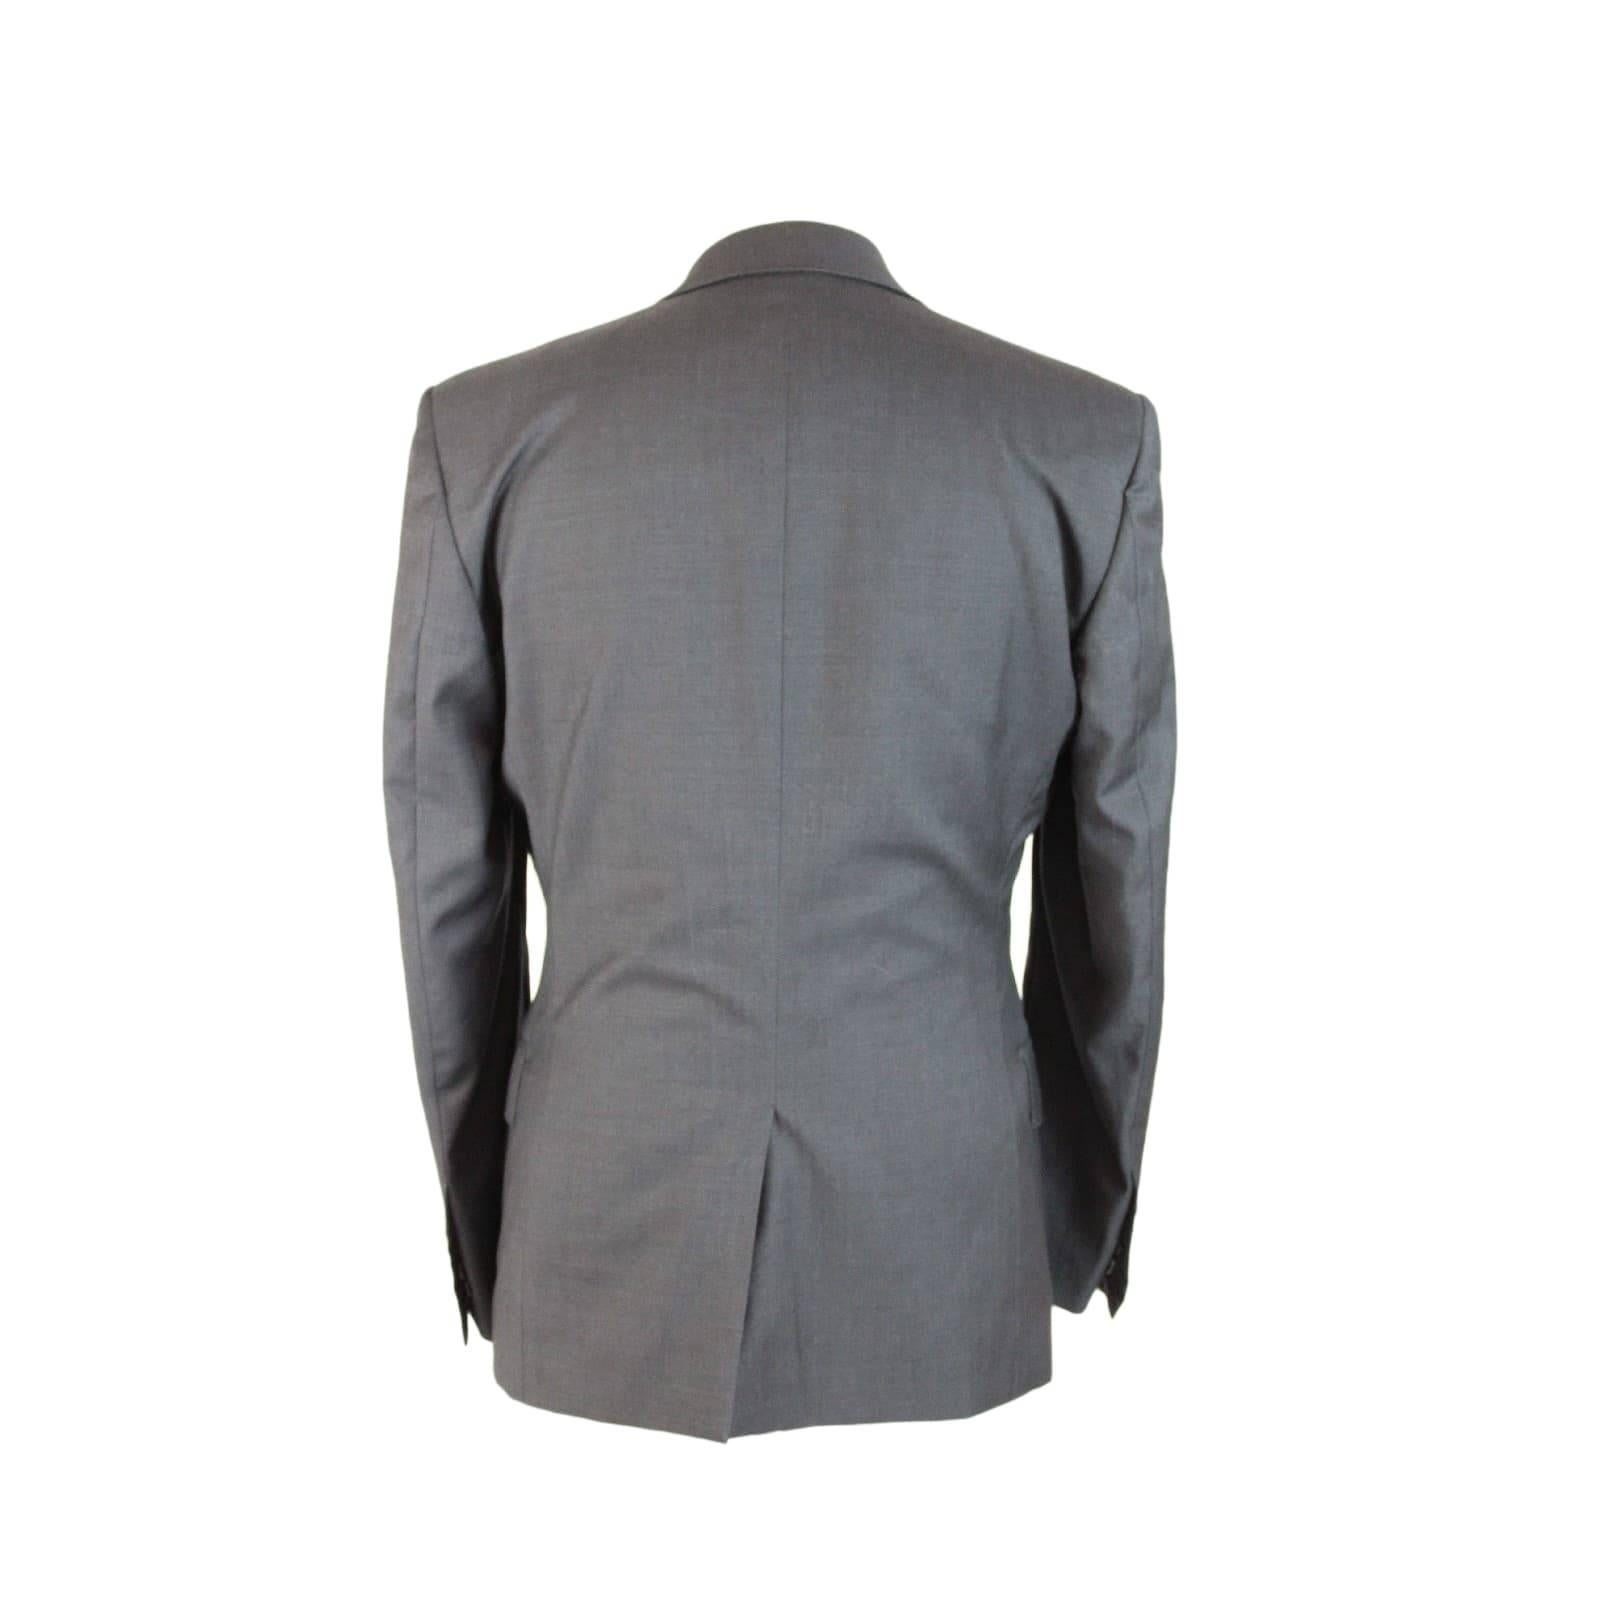 Gray Pierre Balmain gray suit jacket wool pants trousers blazer men’s size 48 it For Sale